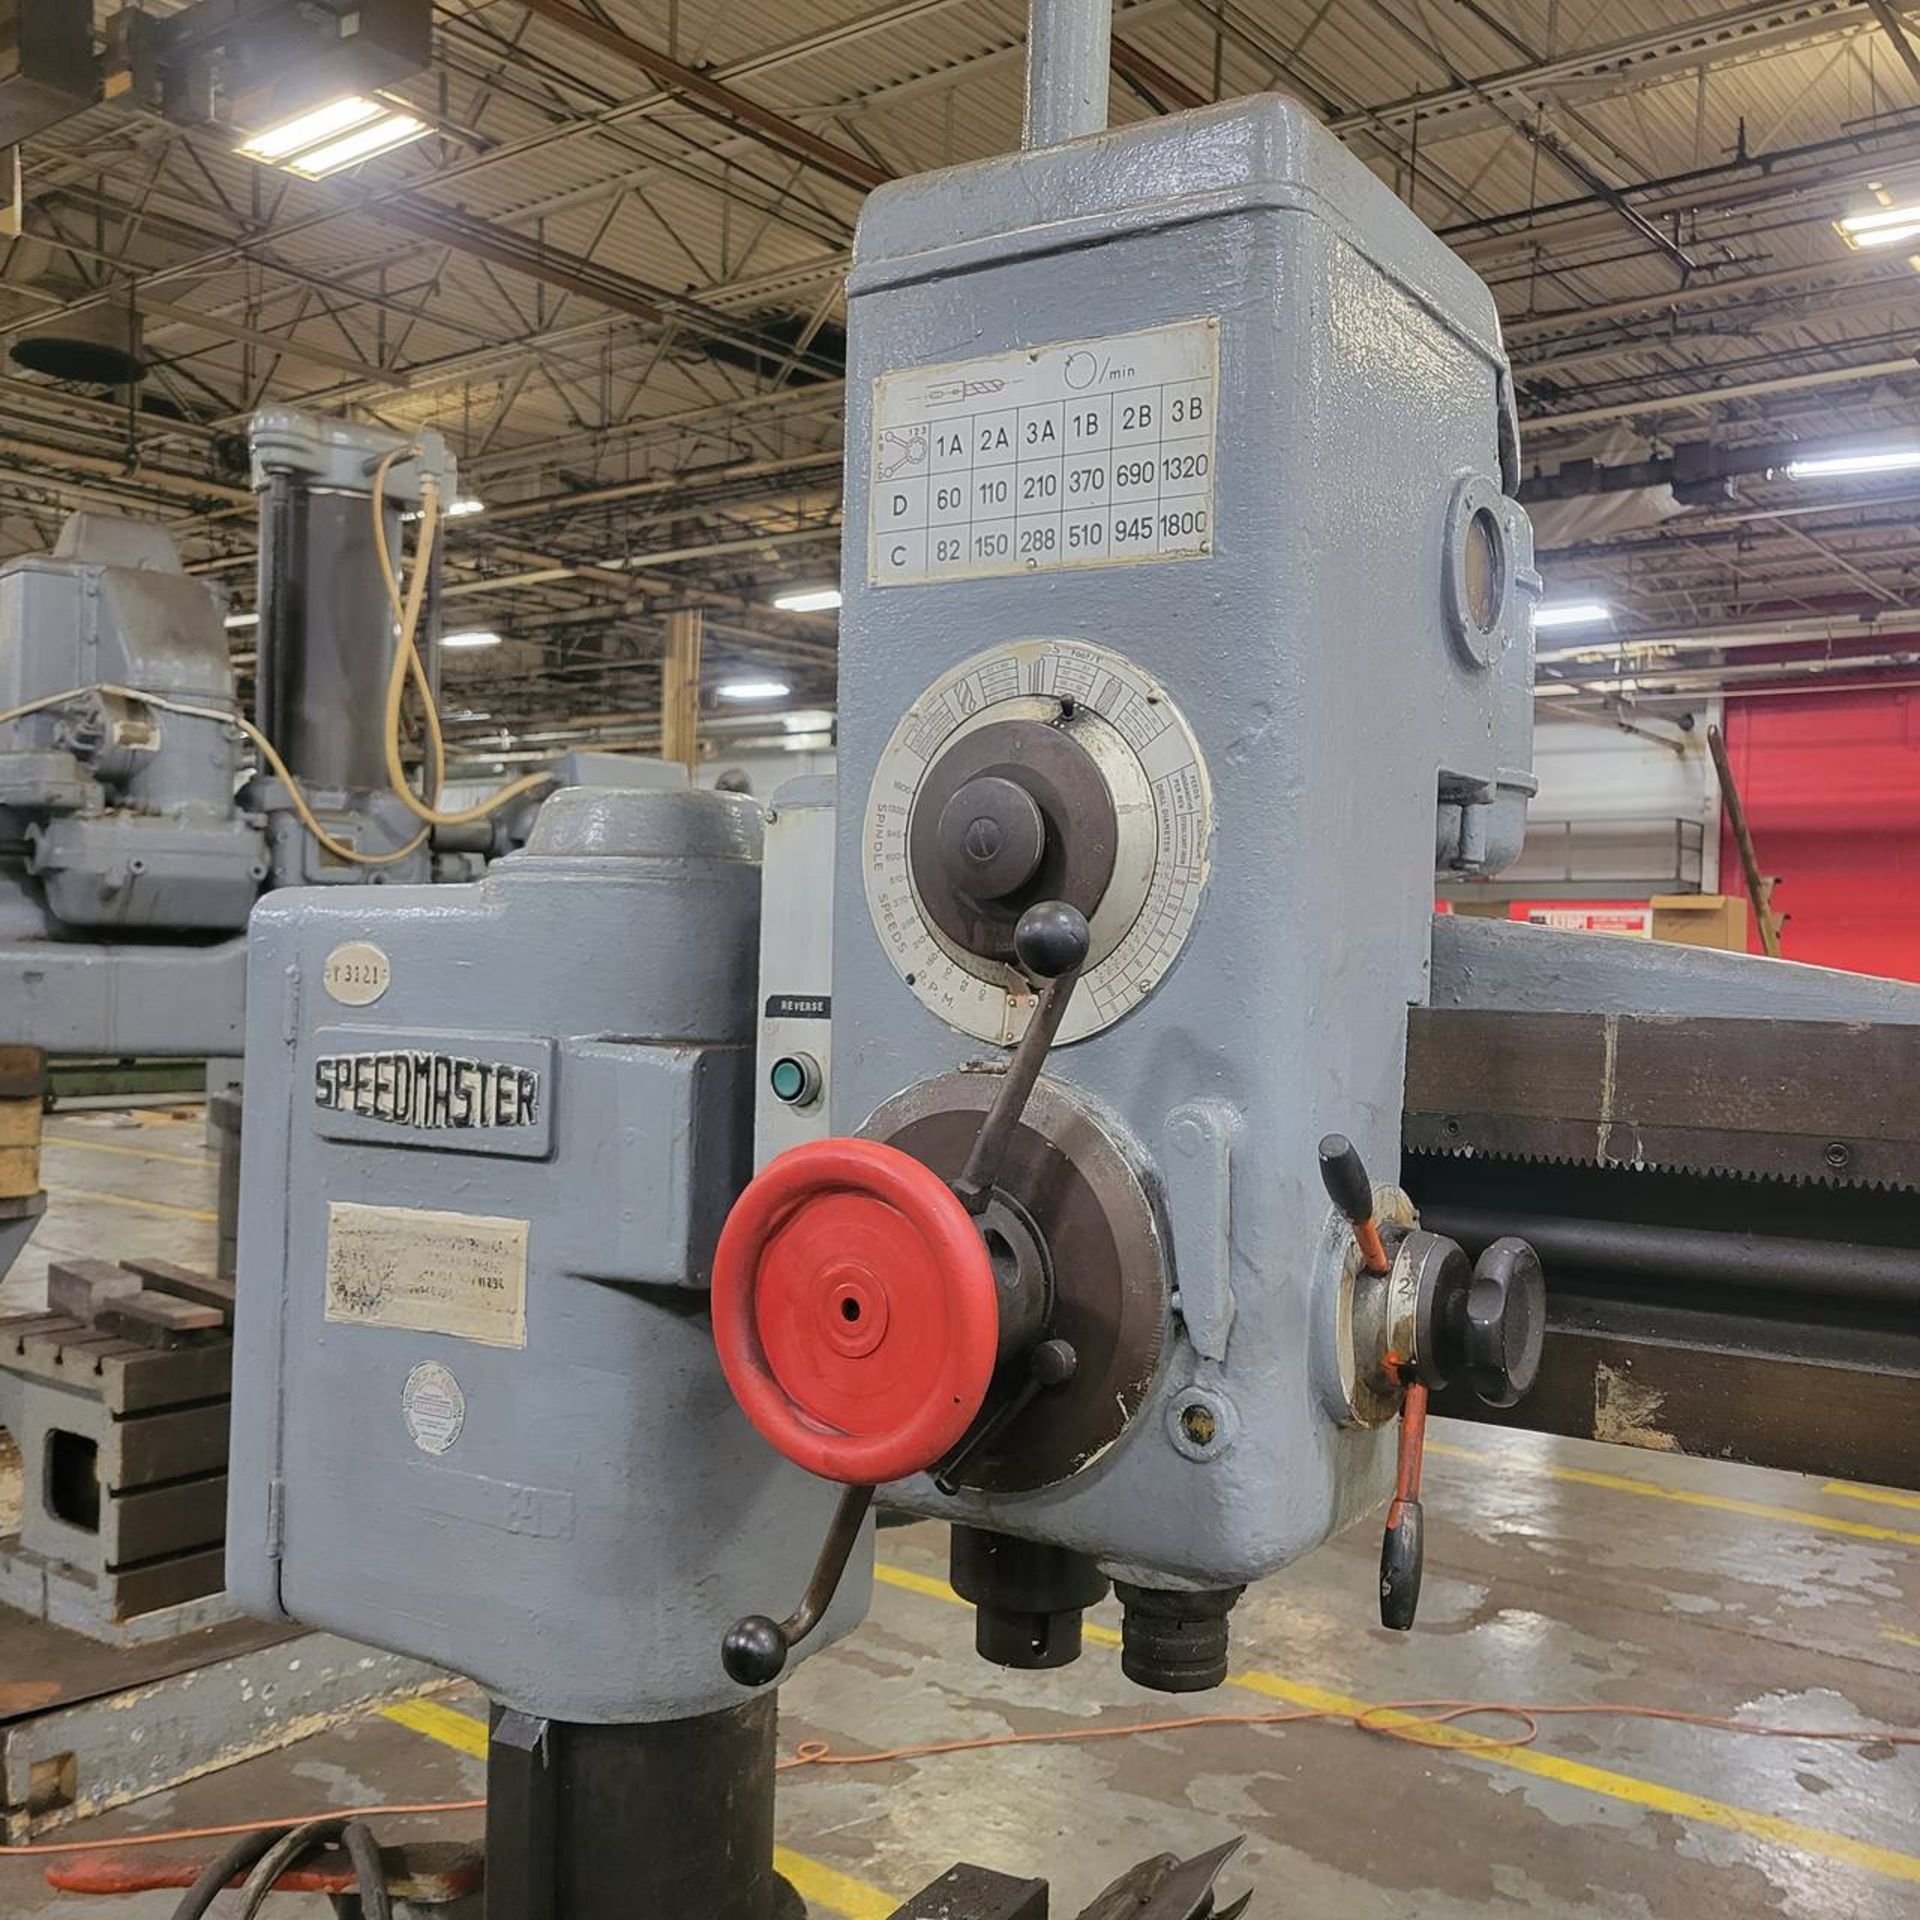 Speedmaster 3' x 8" radial arm drill press, - Image 2 of 2